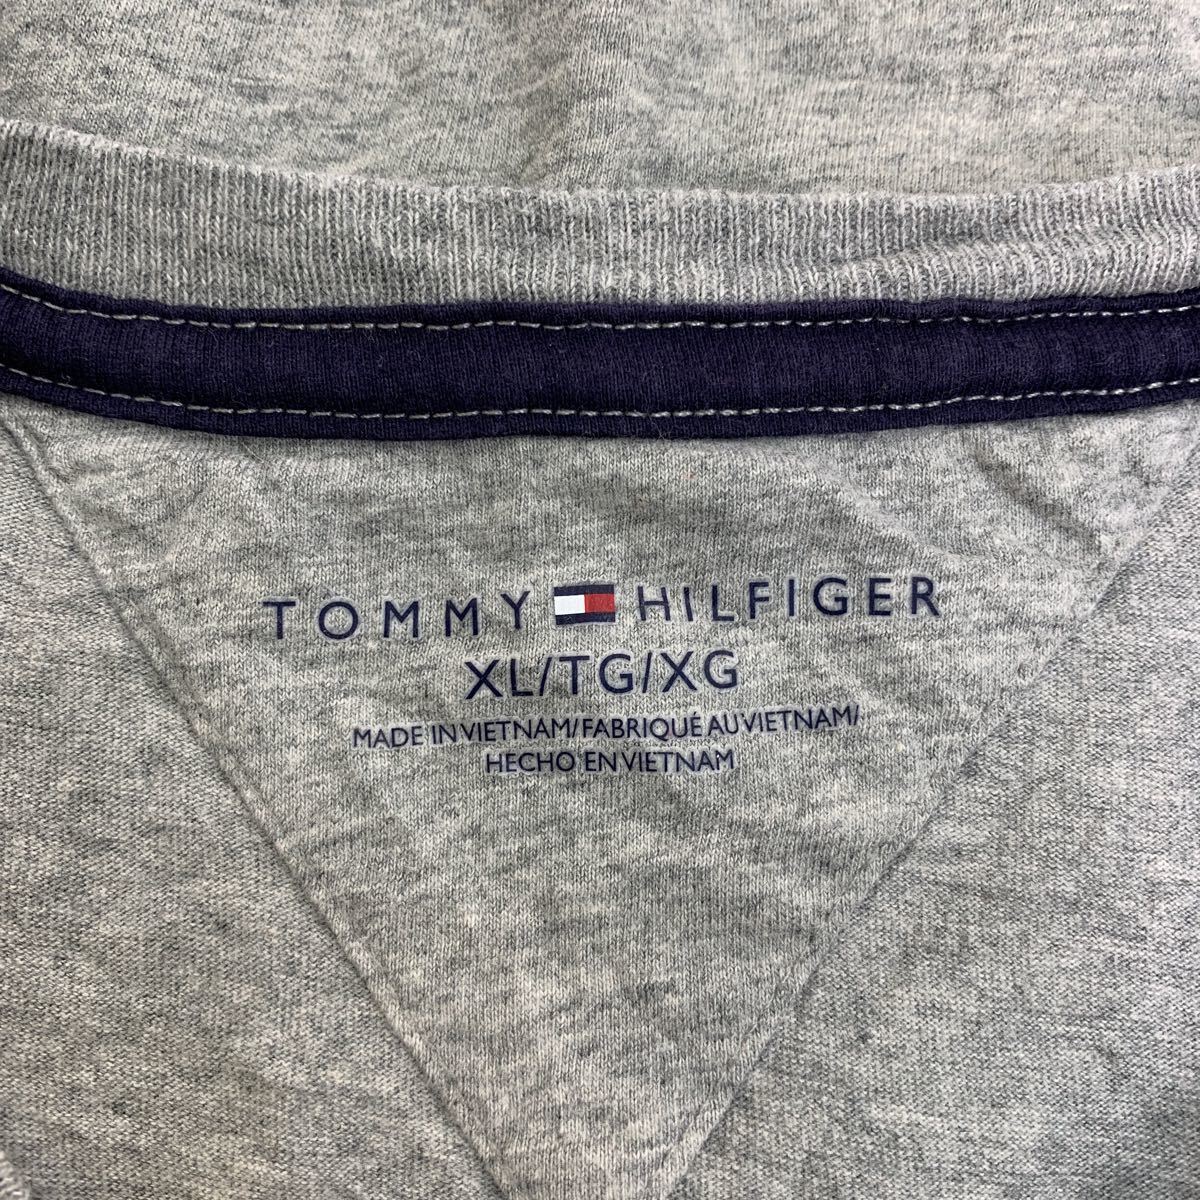 TOMMY HILFIGER ロゴ Tシャツ XL グレー トミーヒルフィガー ワンポイントロゴ ストリート 古着卸 アメリカ仕入れ a406-5354_画像7